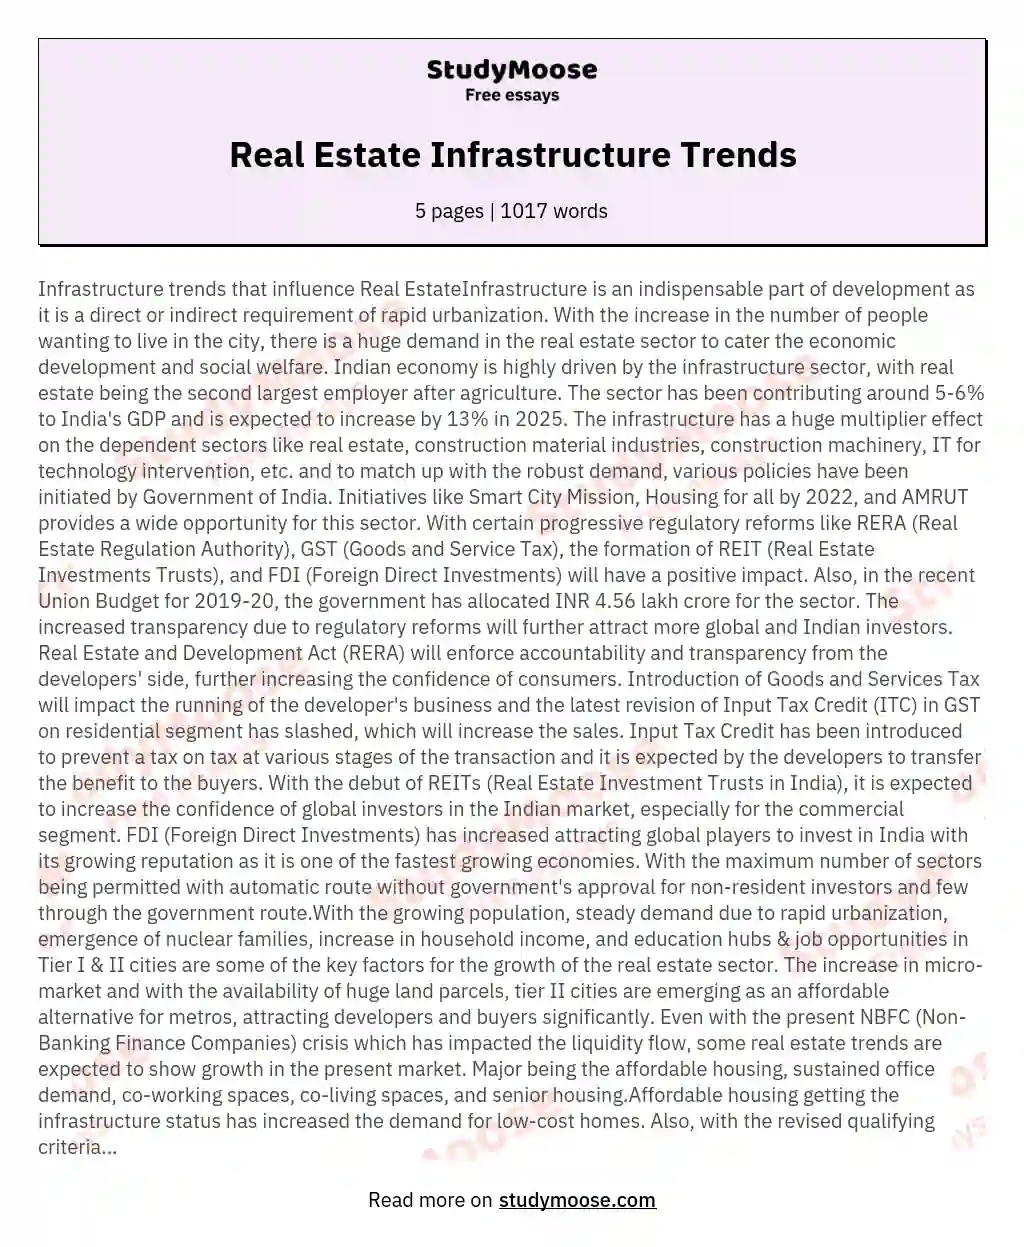 Real Estate Infrastructure Trends essay